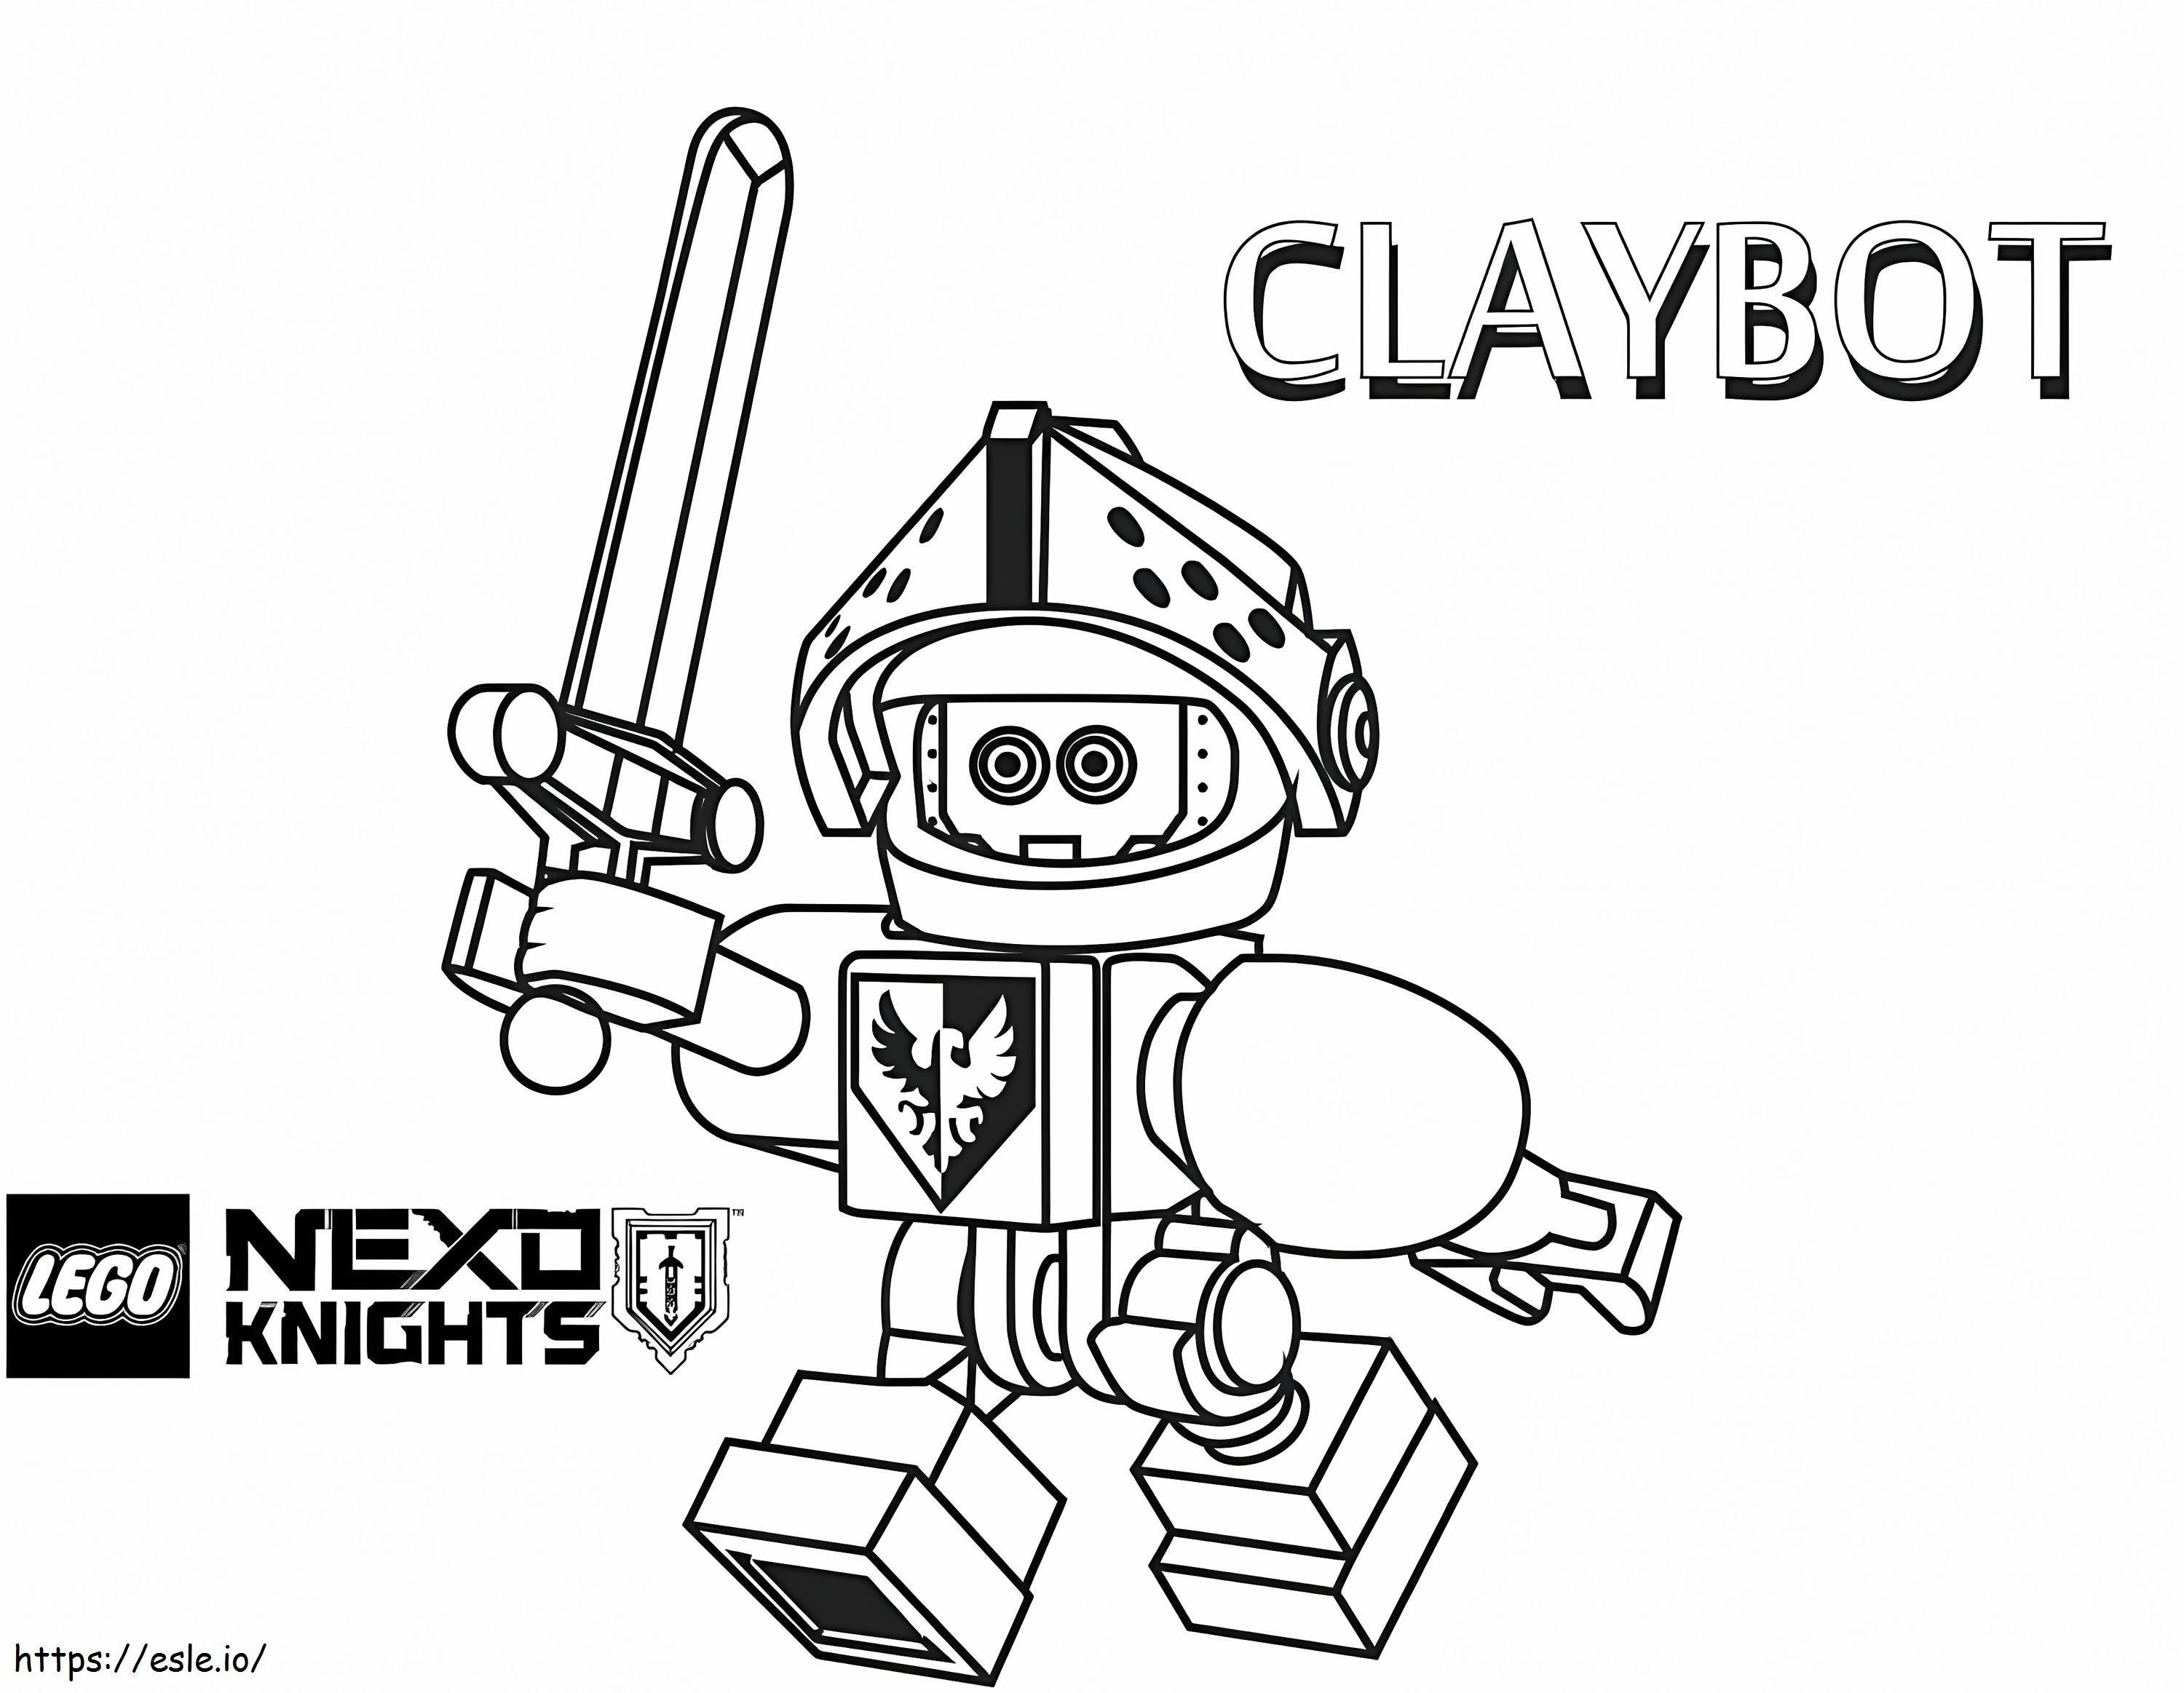 Claybo a Nexo Knightstól kifestő